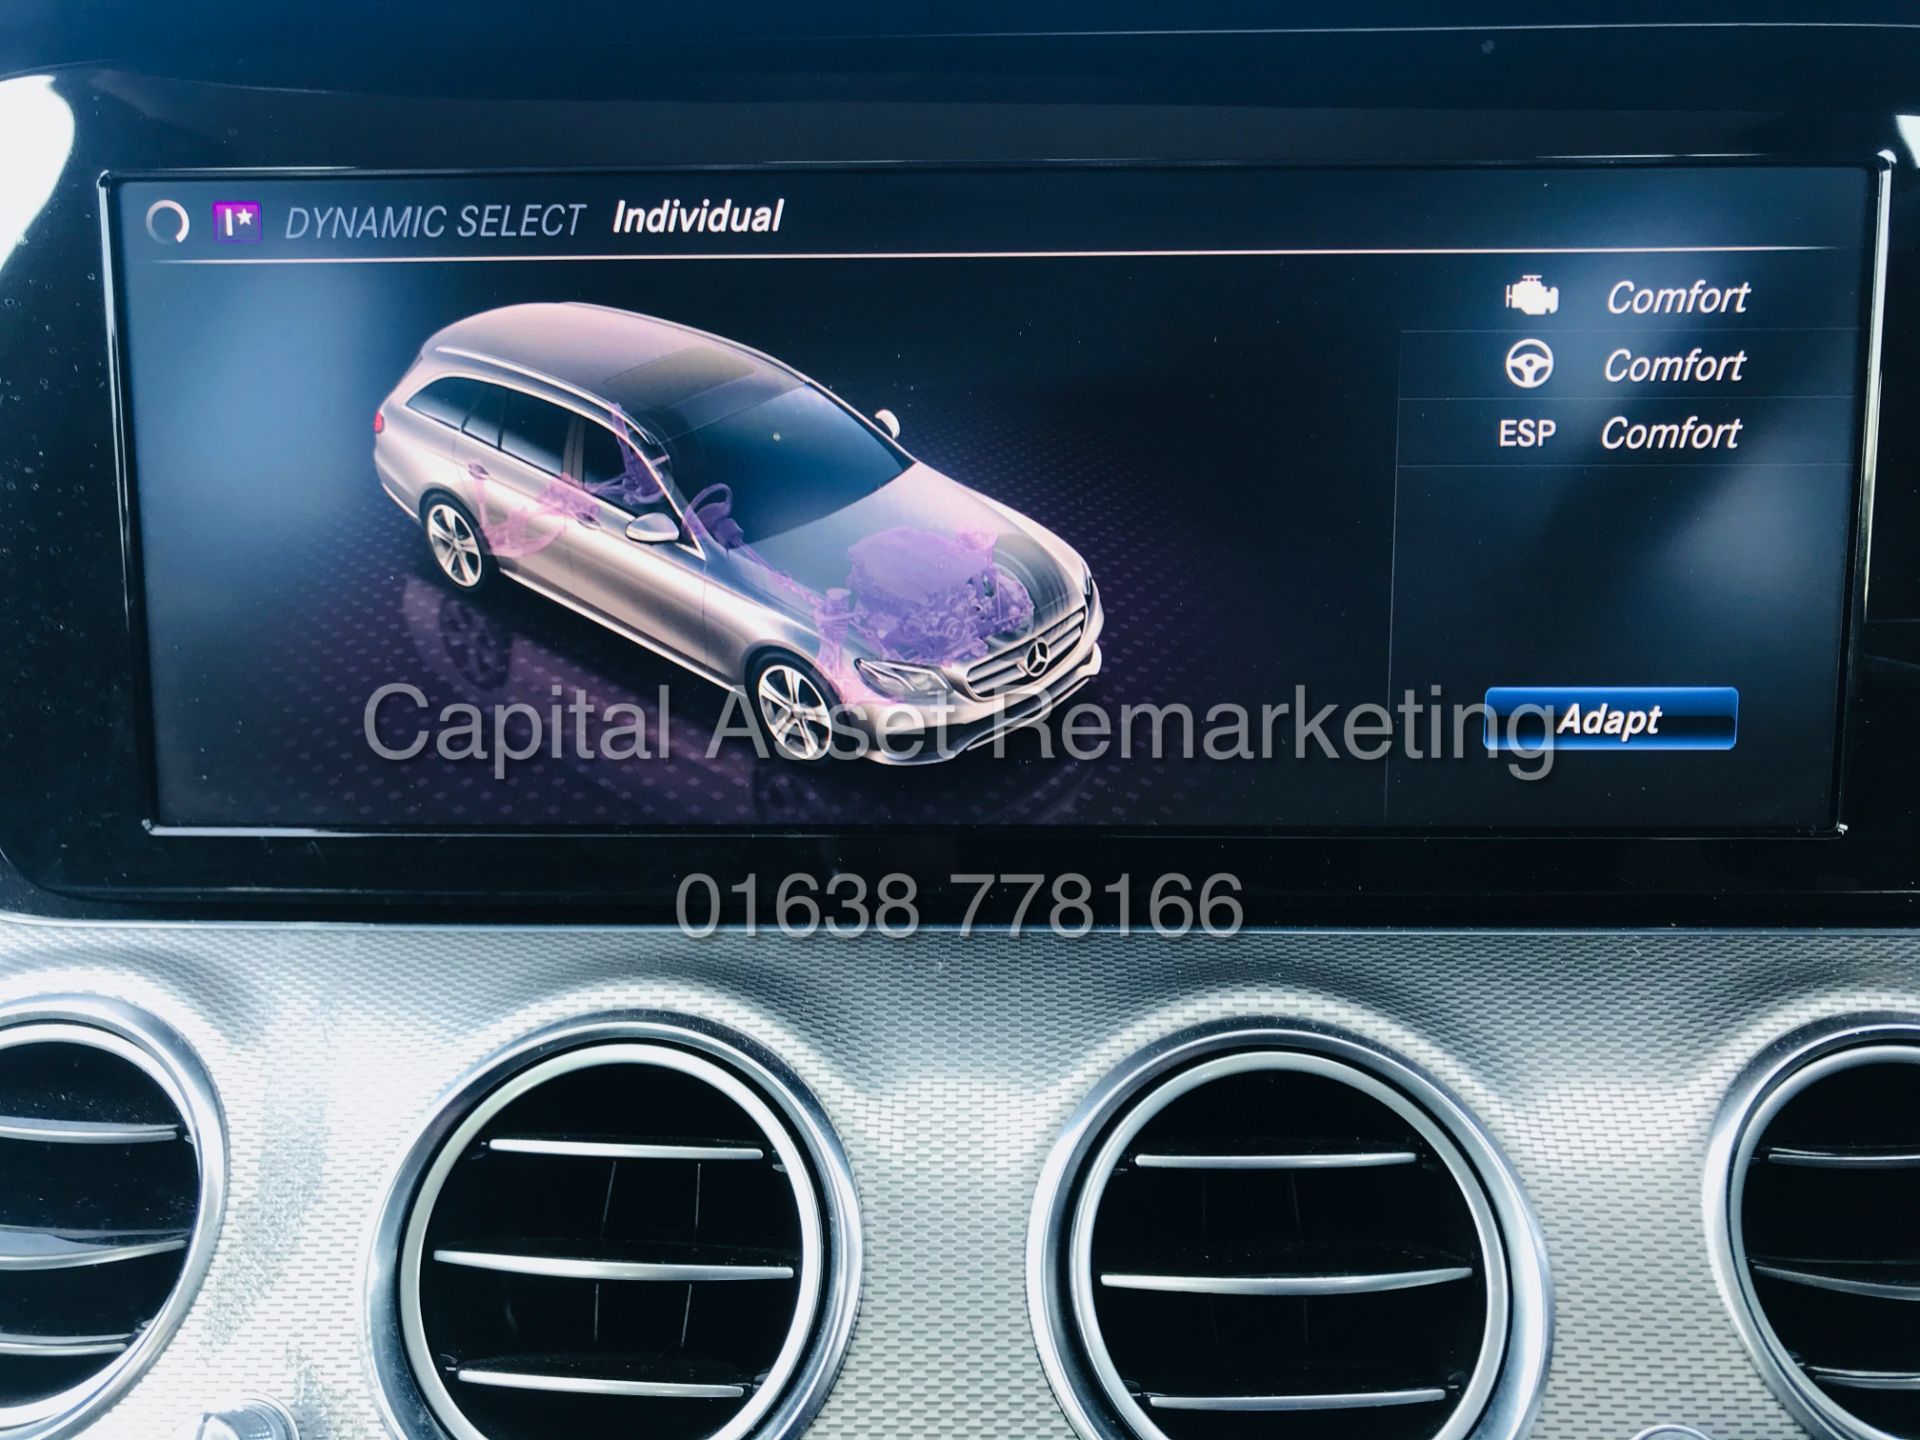 On Sale MERCEDES E220d "ESTATE" 9G TRONIC AUTO (2019 MODEL) 1 OWNER - SAT NAV - LEATHER - - Image 33 of 40